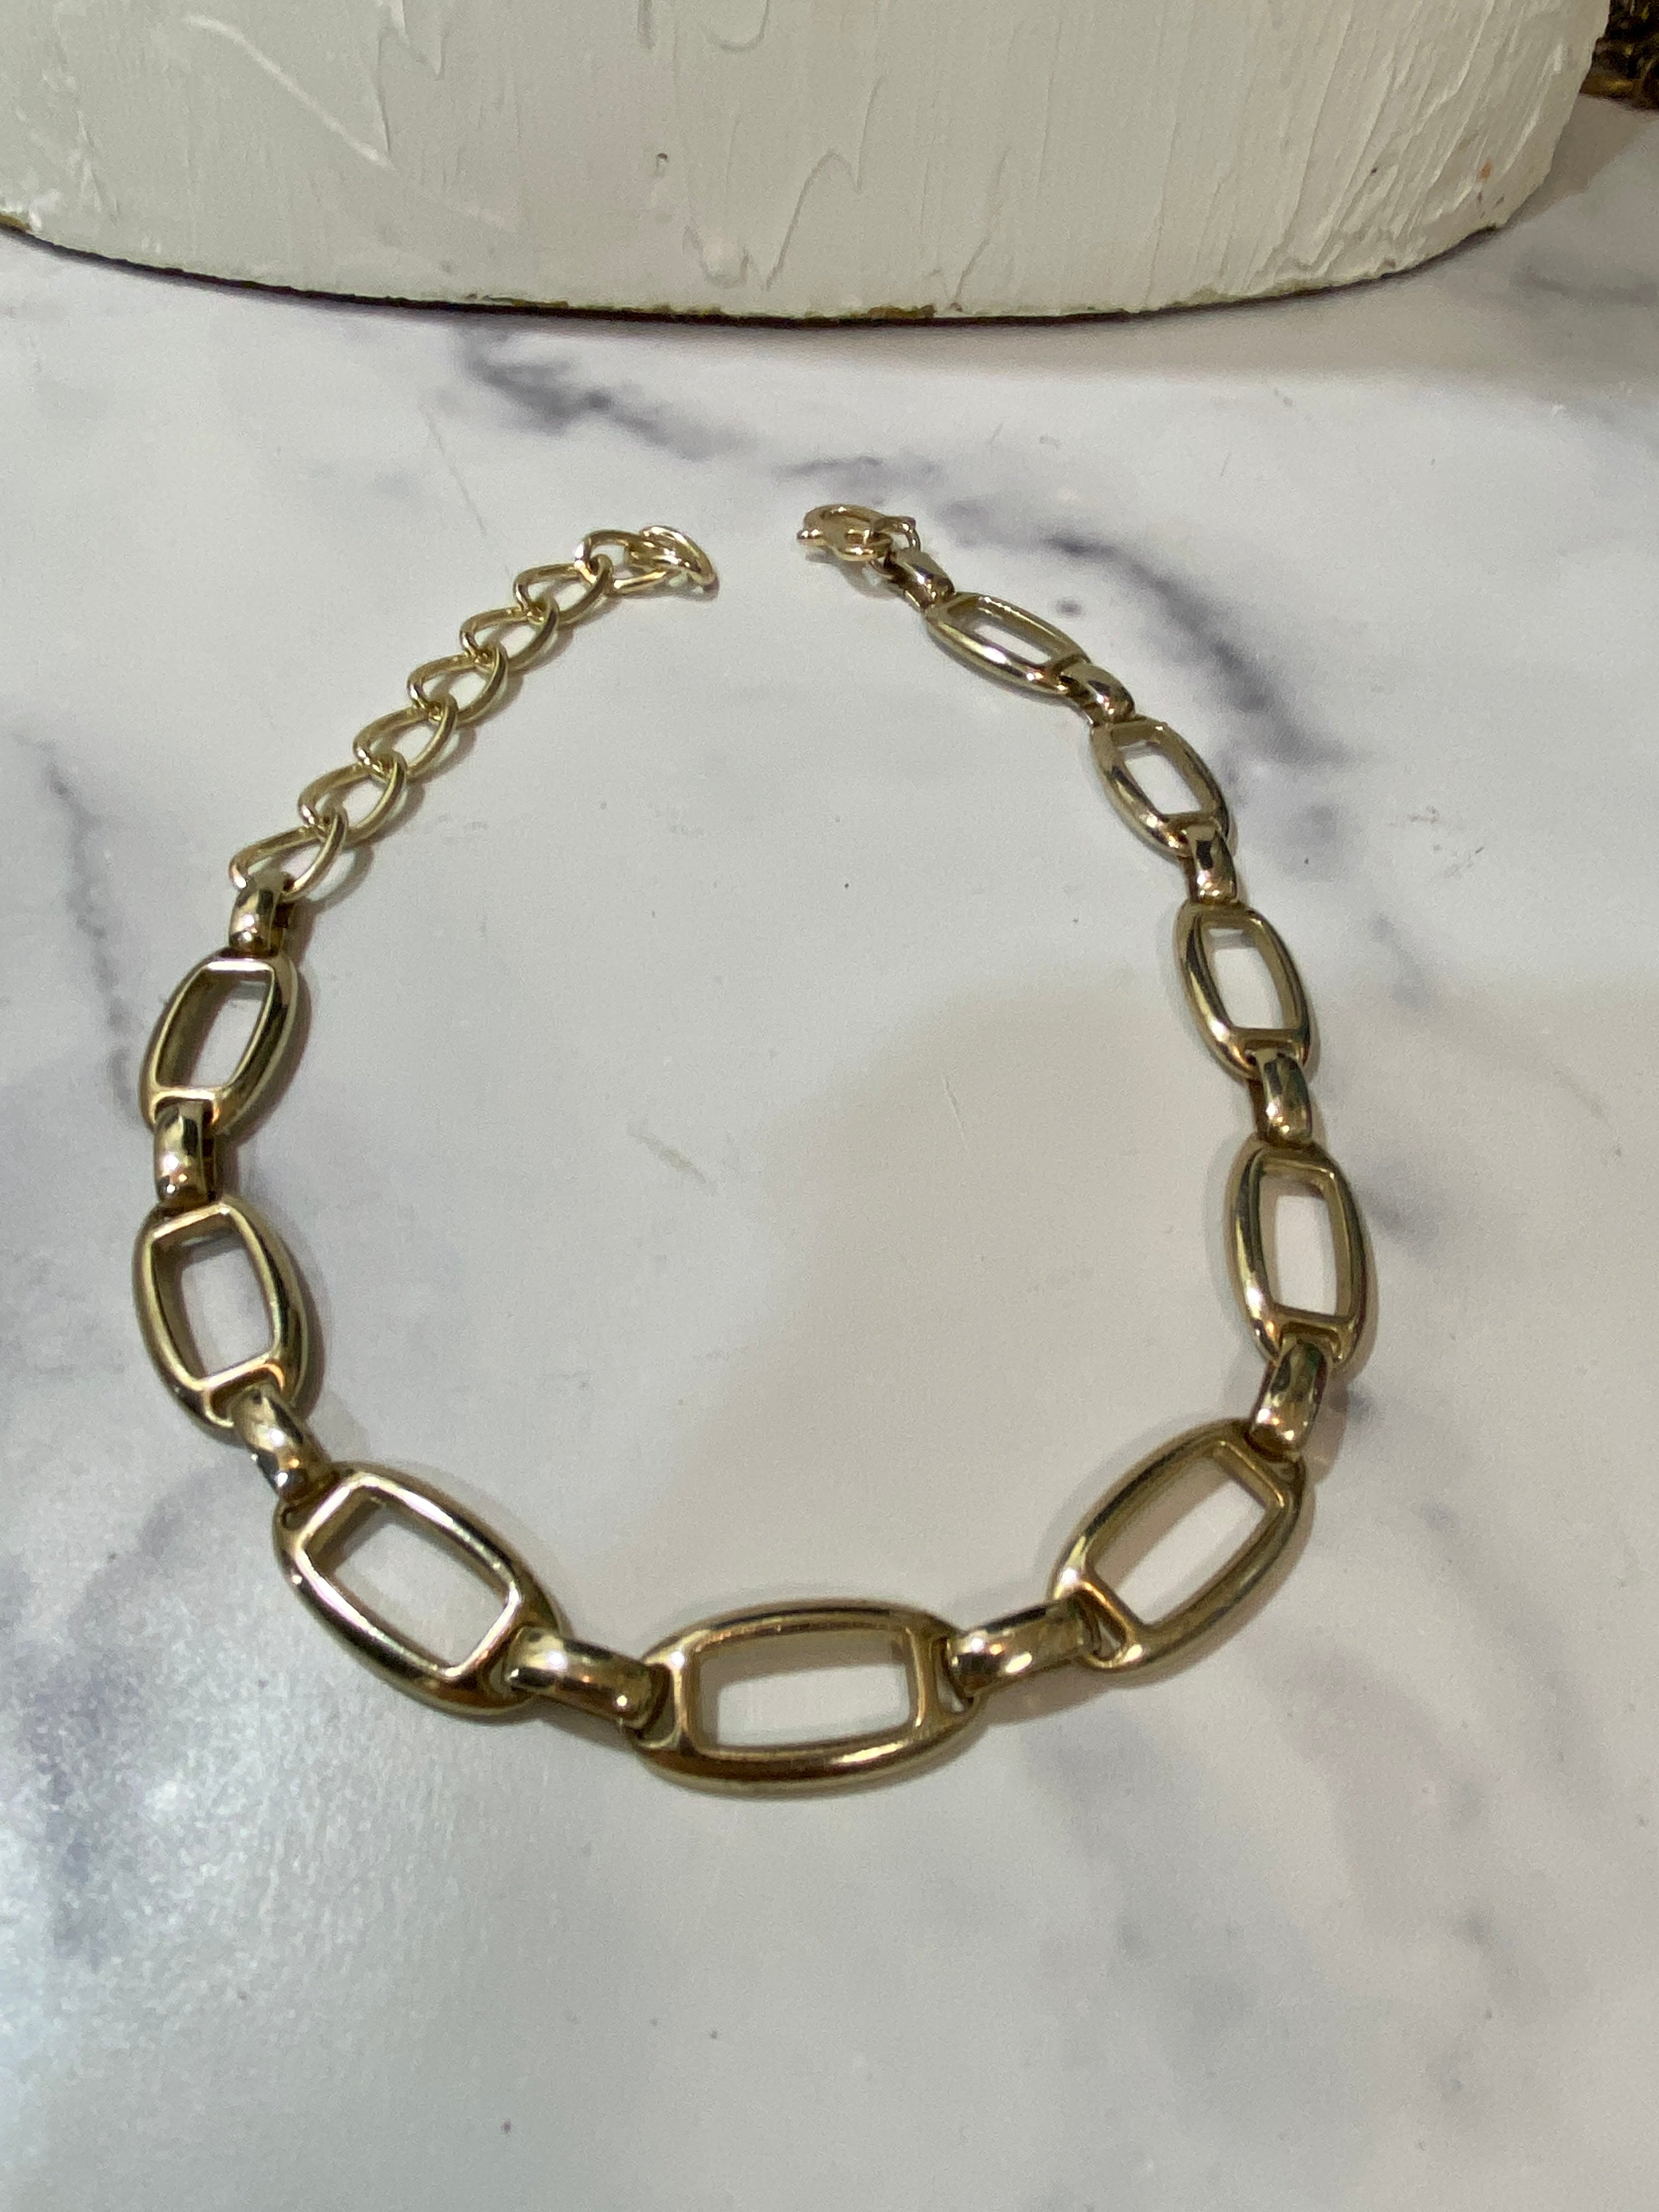 Simple chain